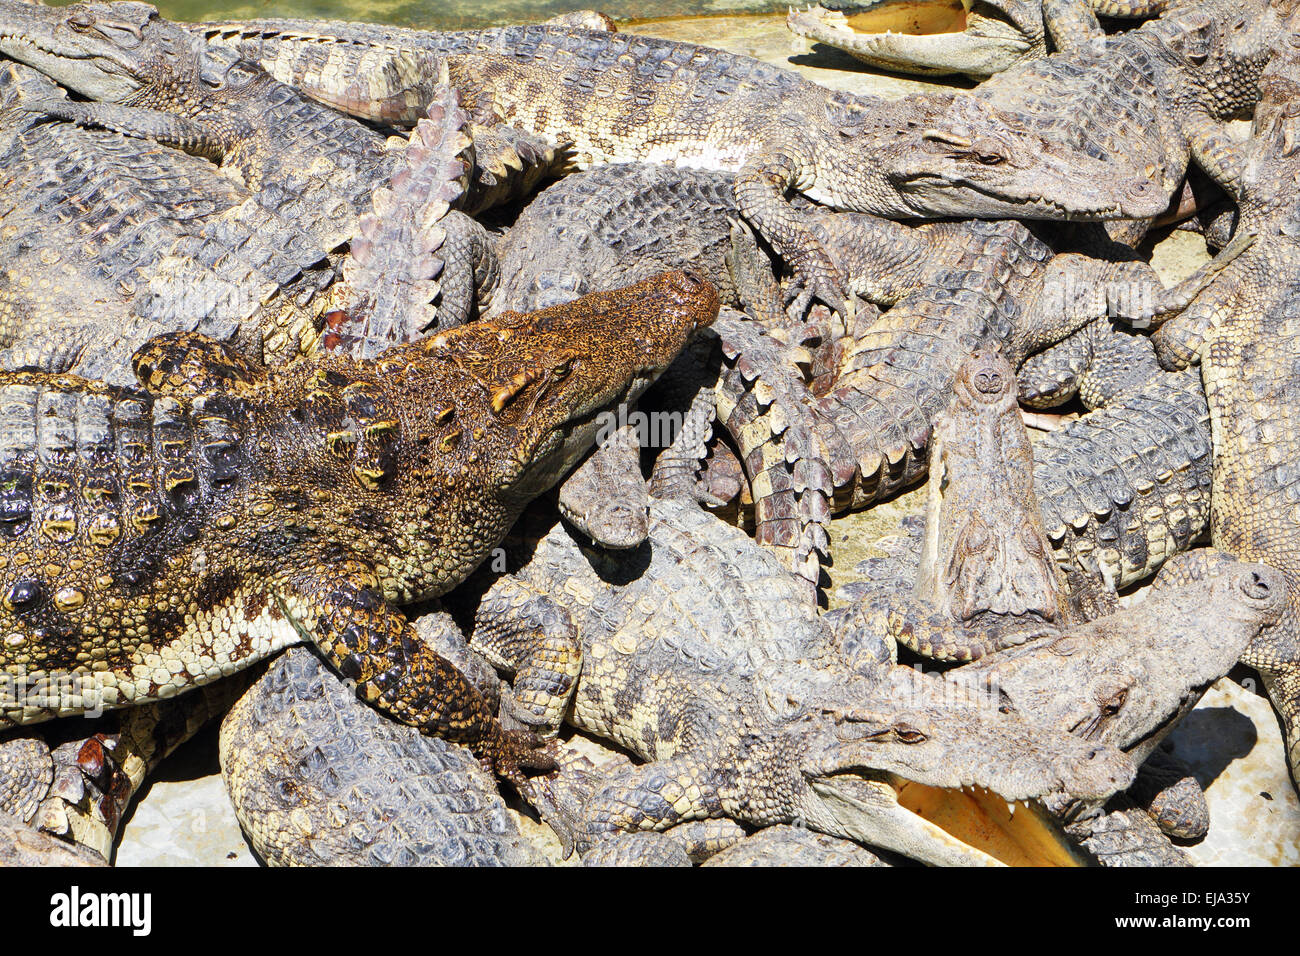 A well-fed predatory crocodiles Stock Photo